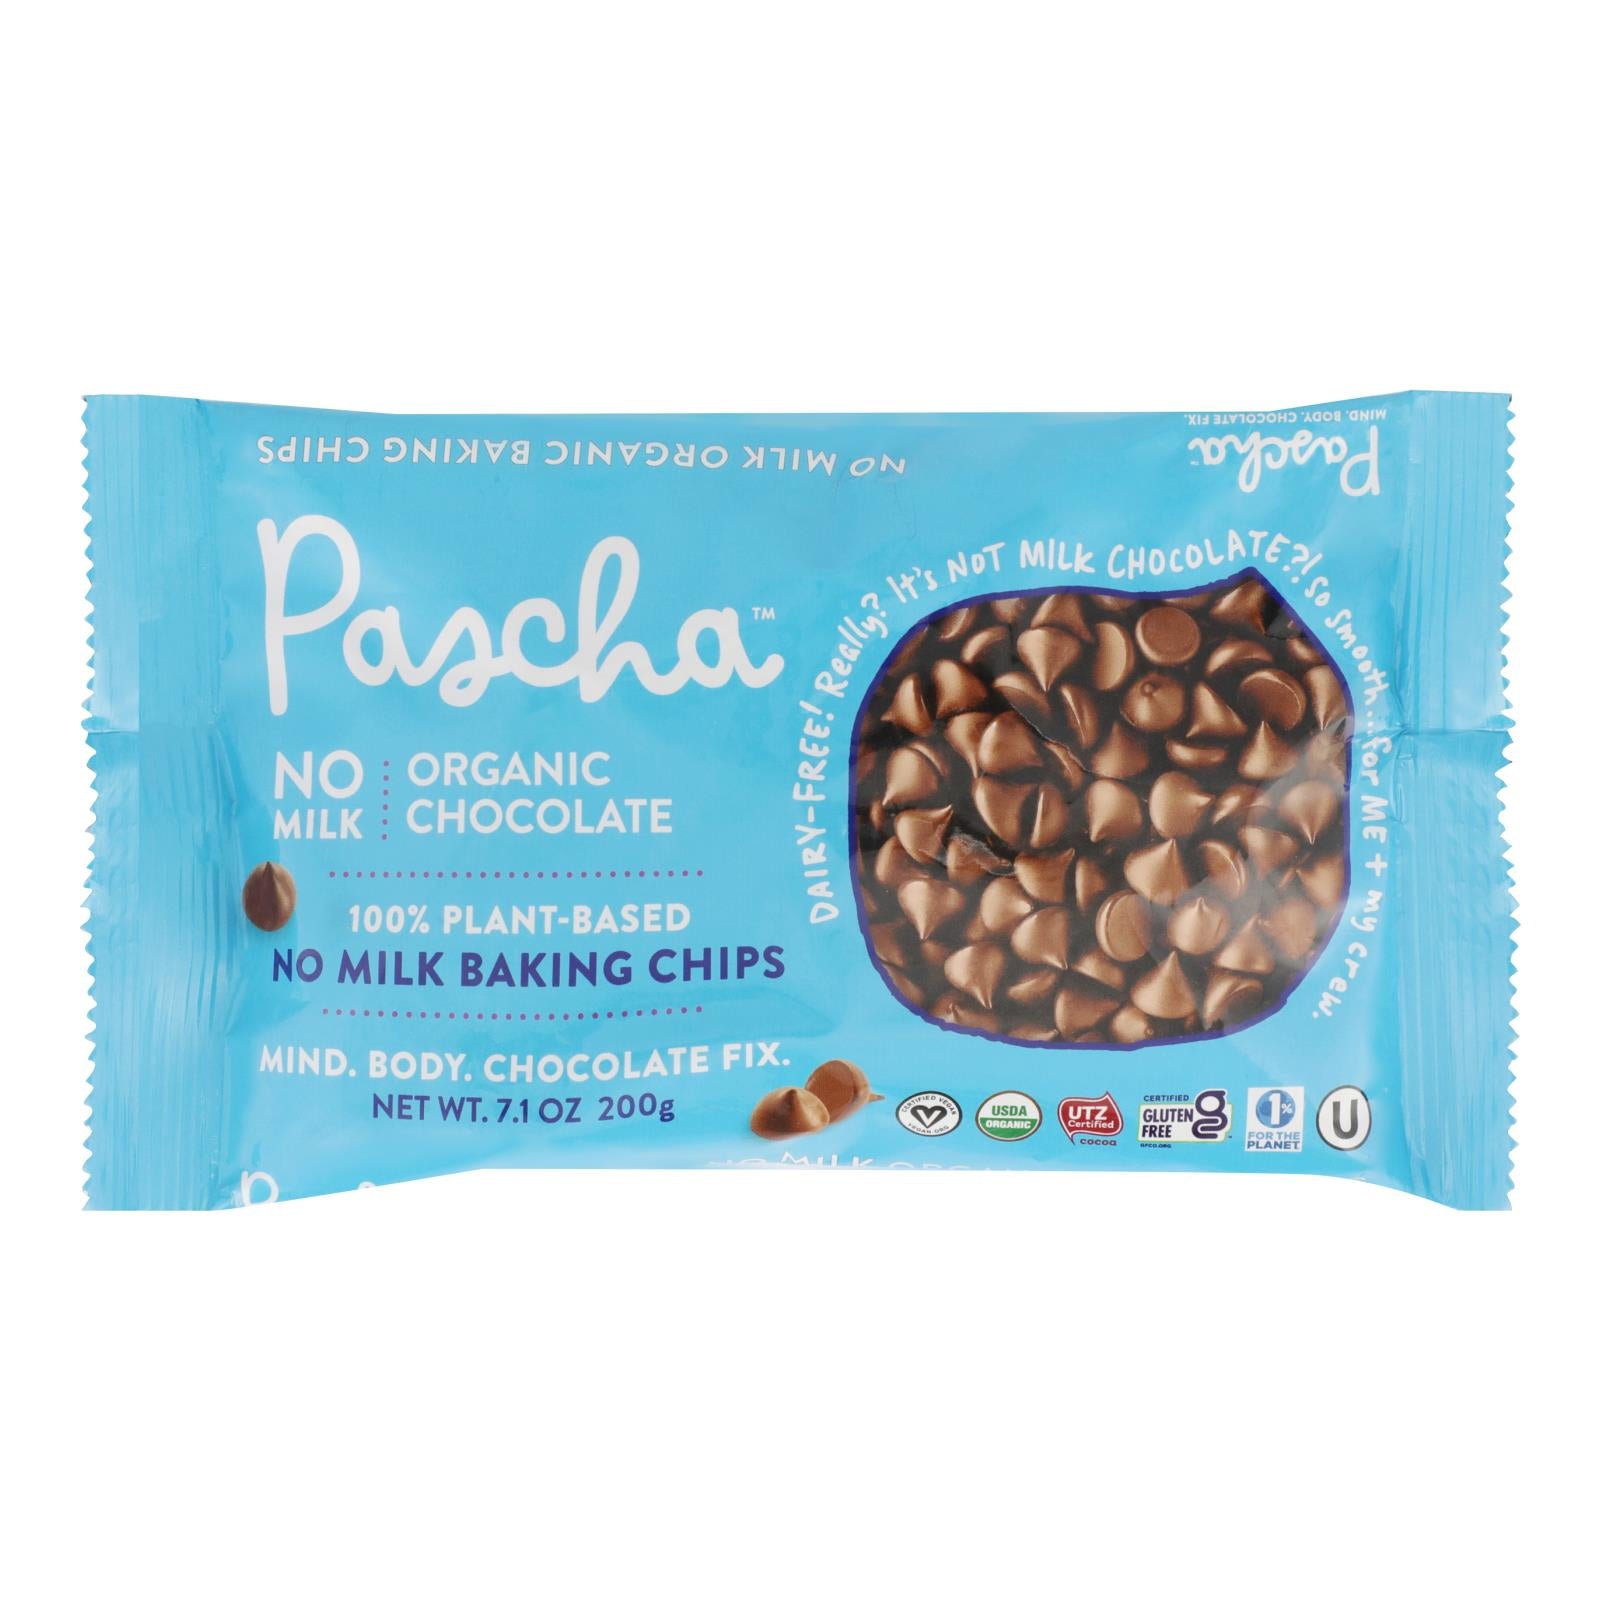 Pascha Organic Rice Milk Chocolate Baking Chips - Chocolate - Case Of 8 - 7 Oz